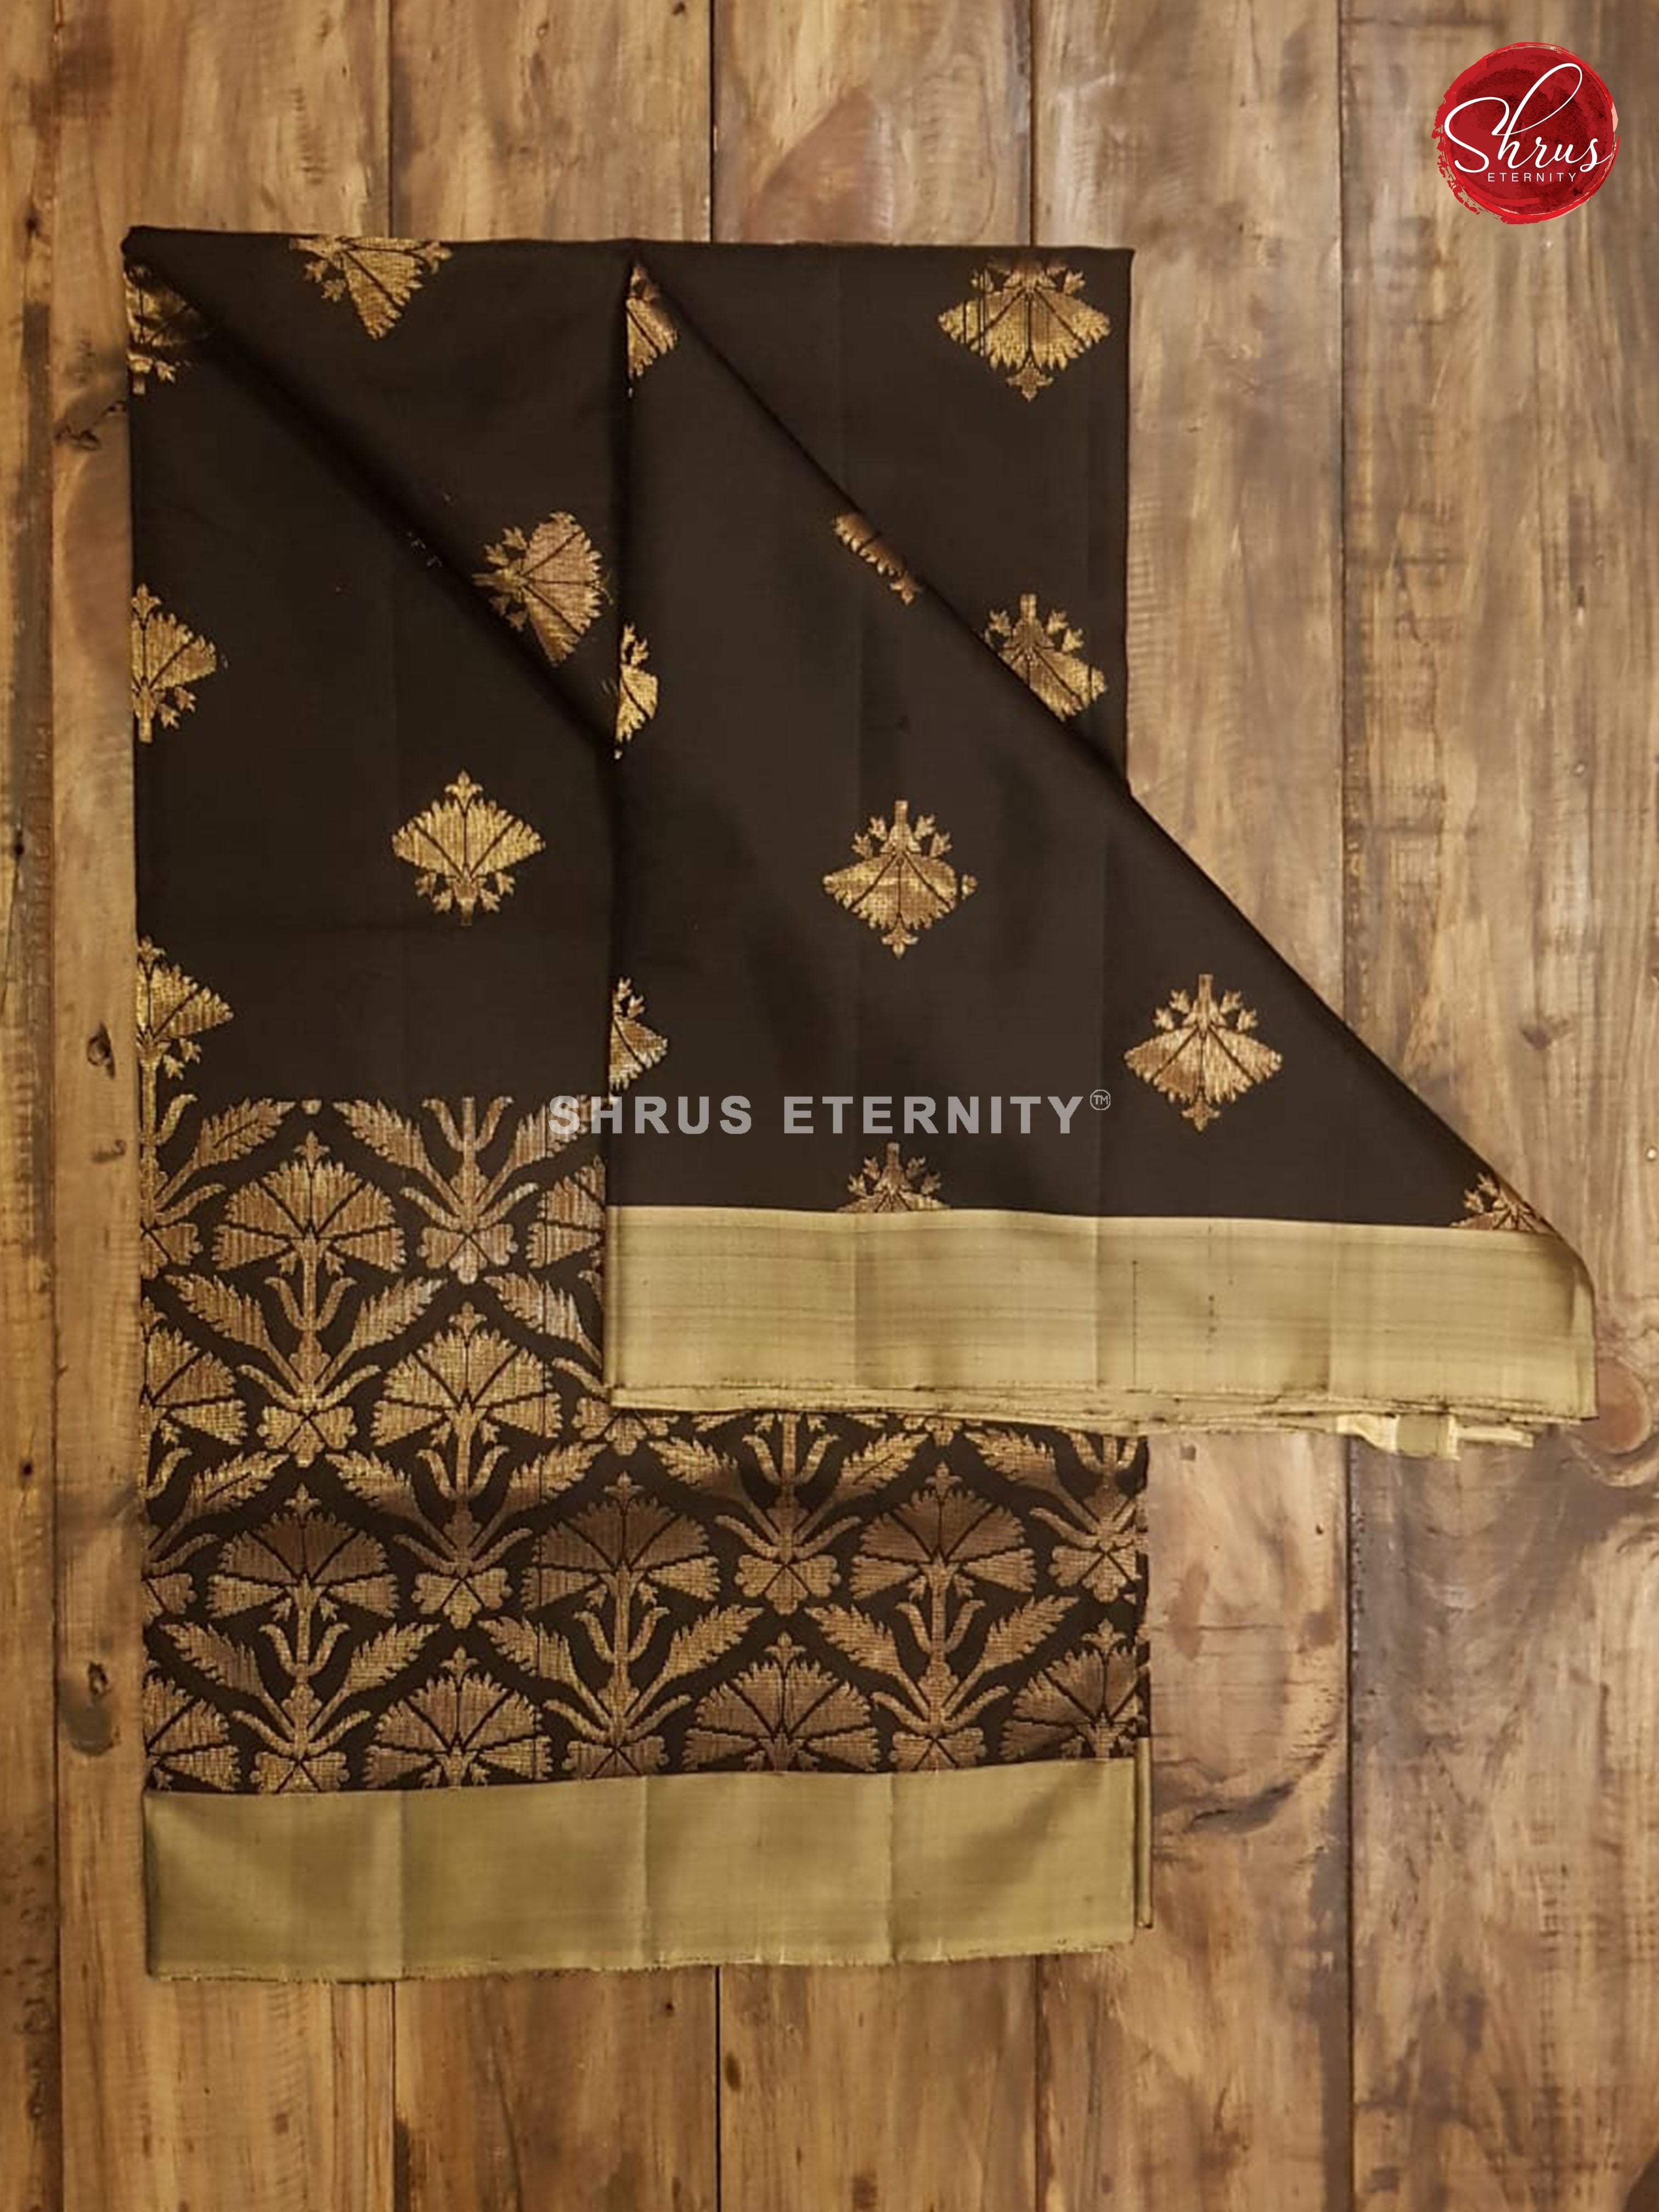 Black & Beige  - Soft Silk - Shop on ShrusEternity.com